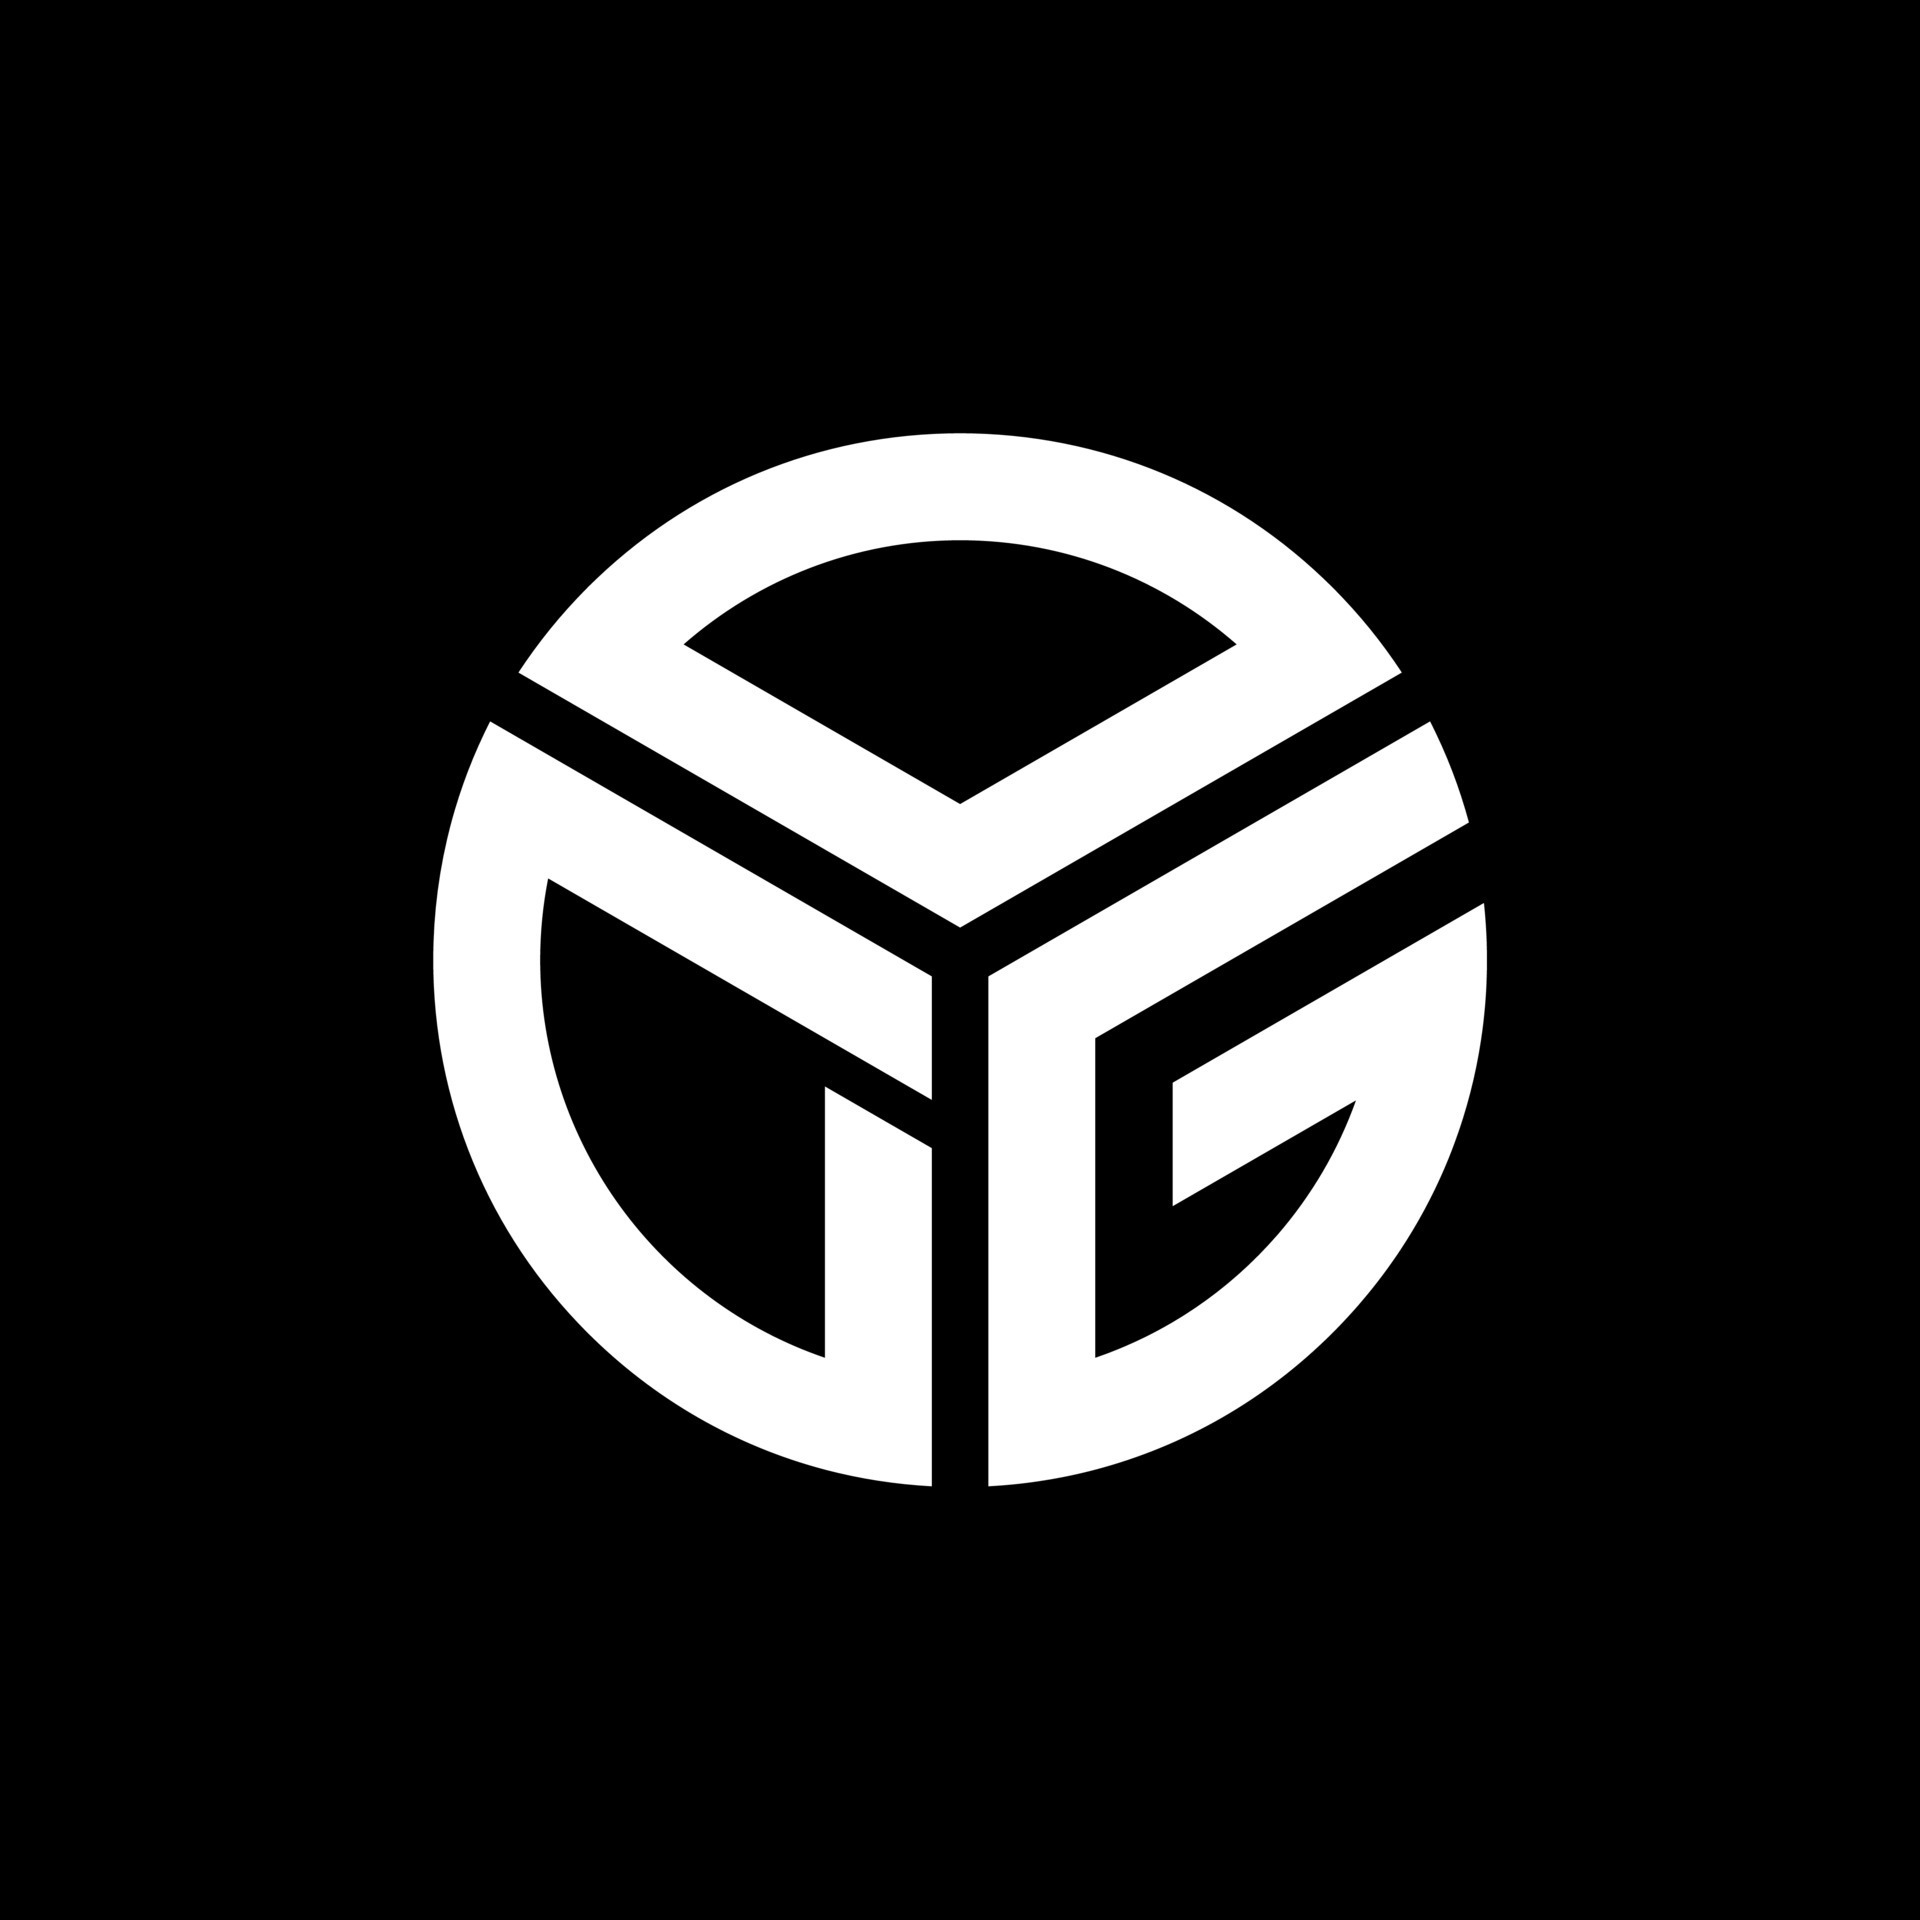 ODG letter logo design on black background. ODG creative initials ...